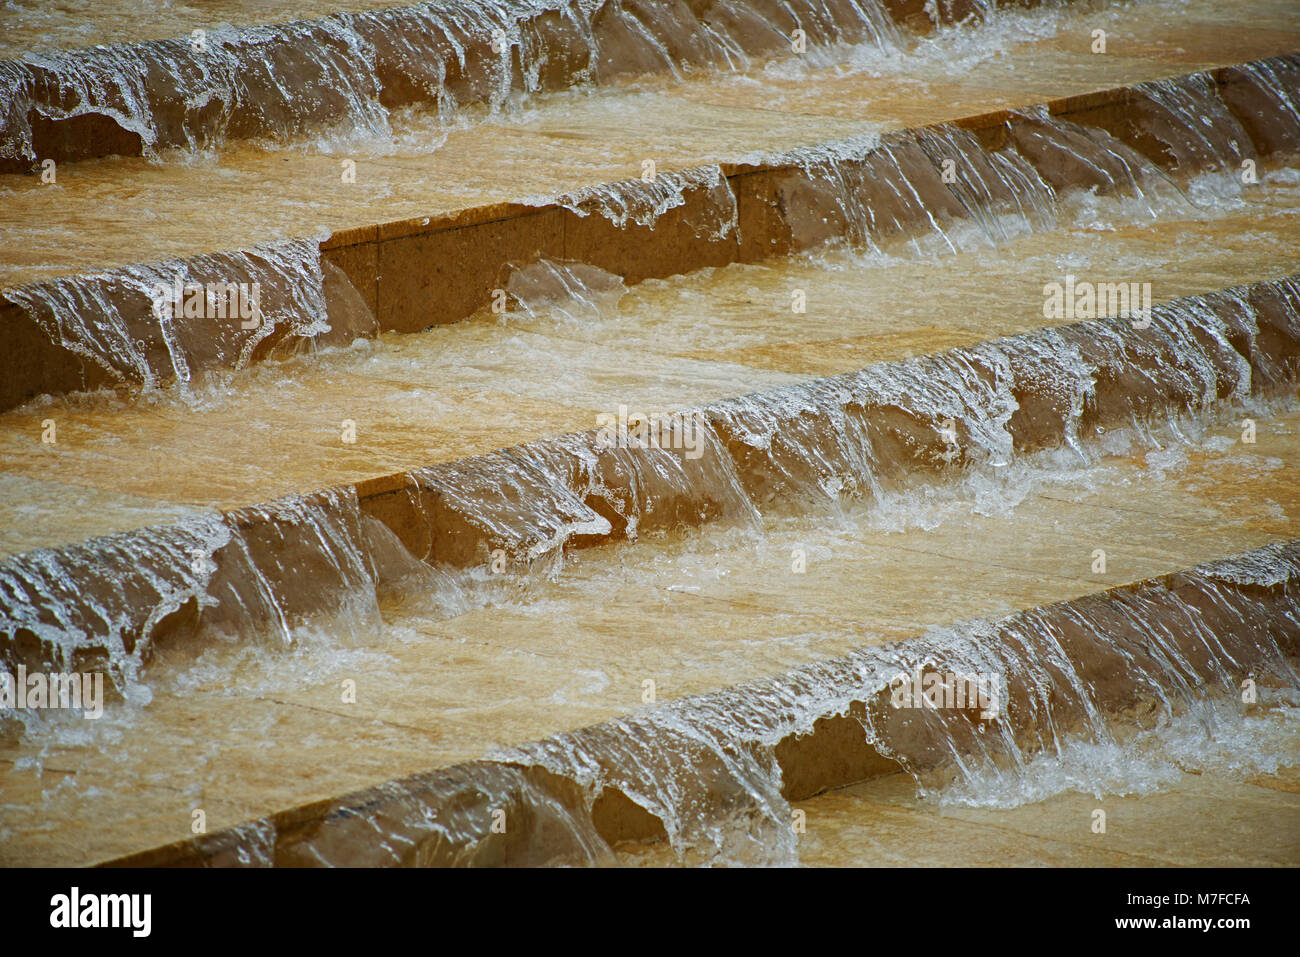 Stepped waterfallsheenwater Stock Photo